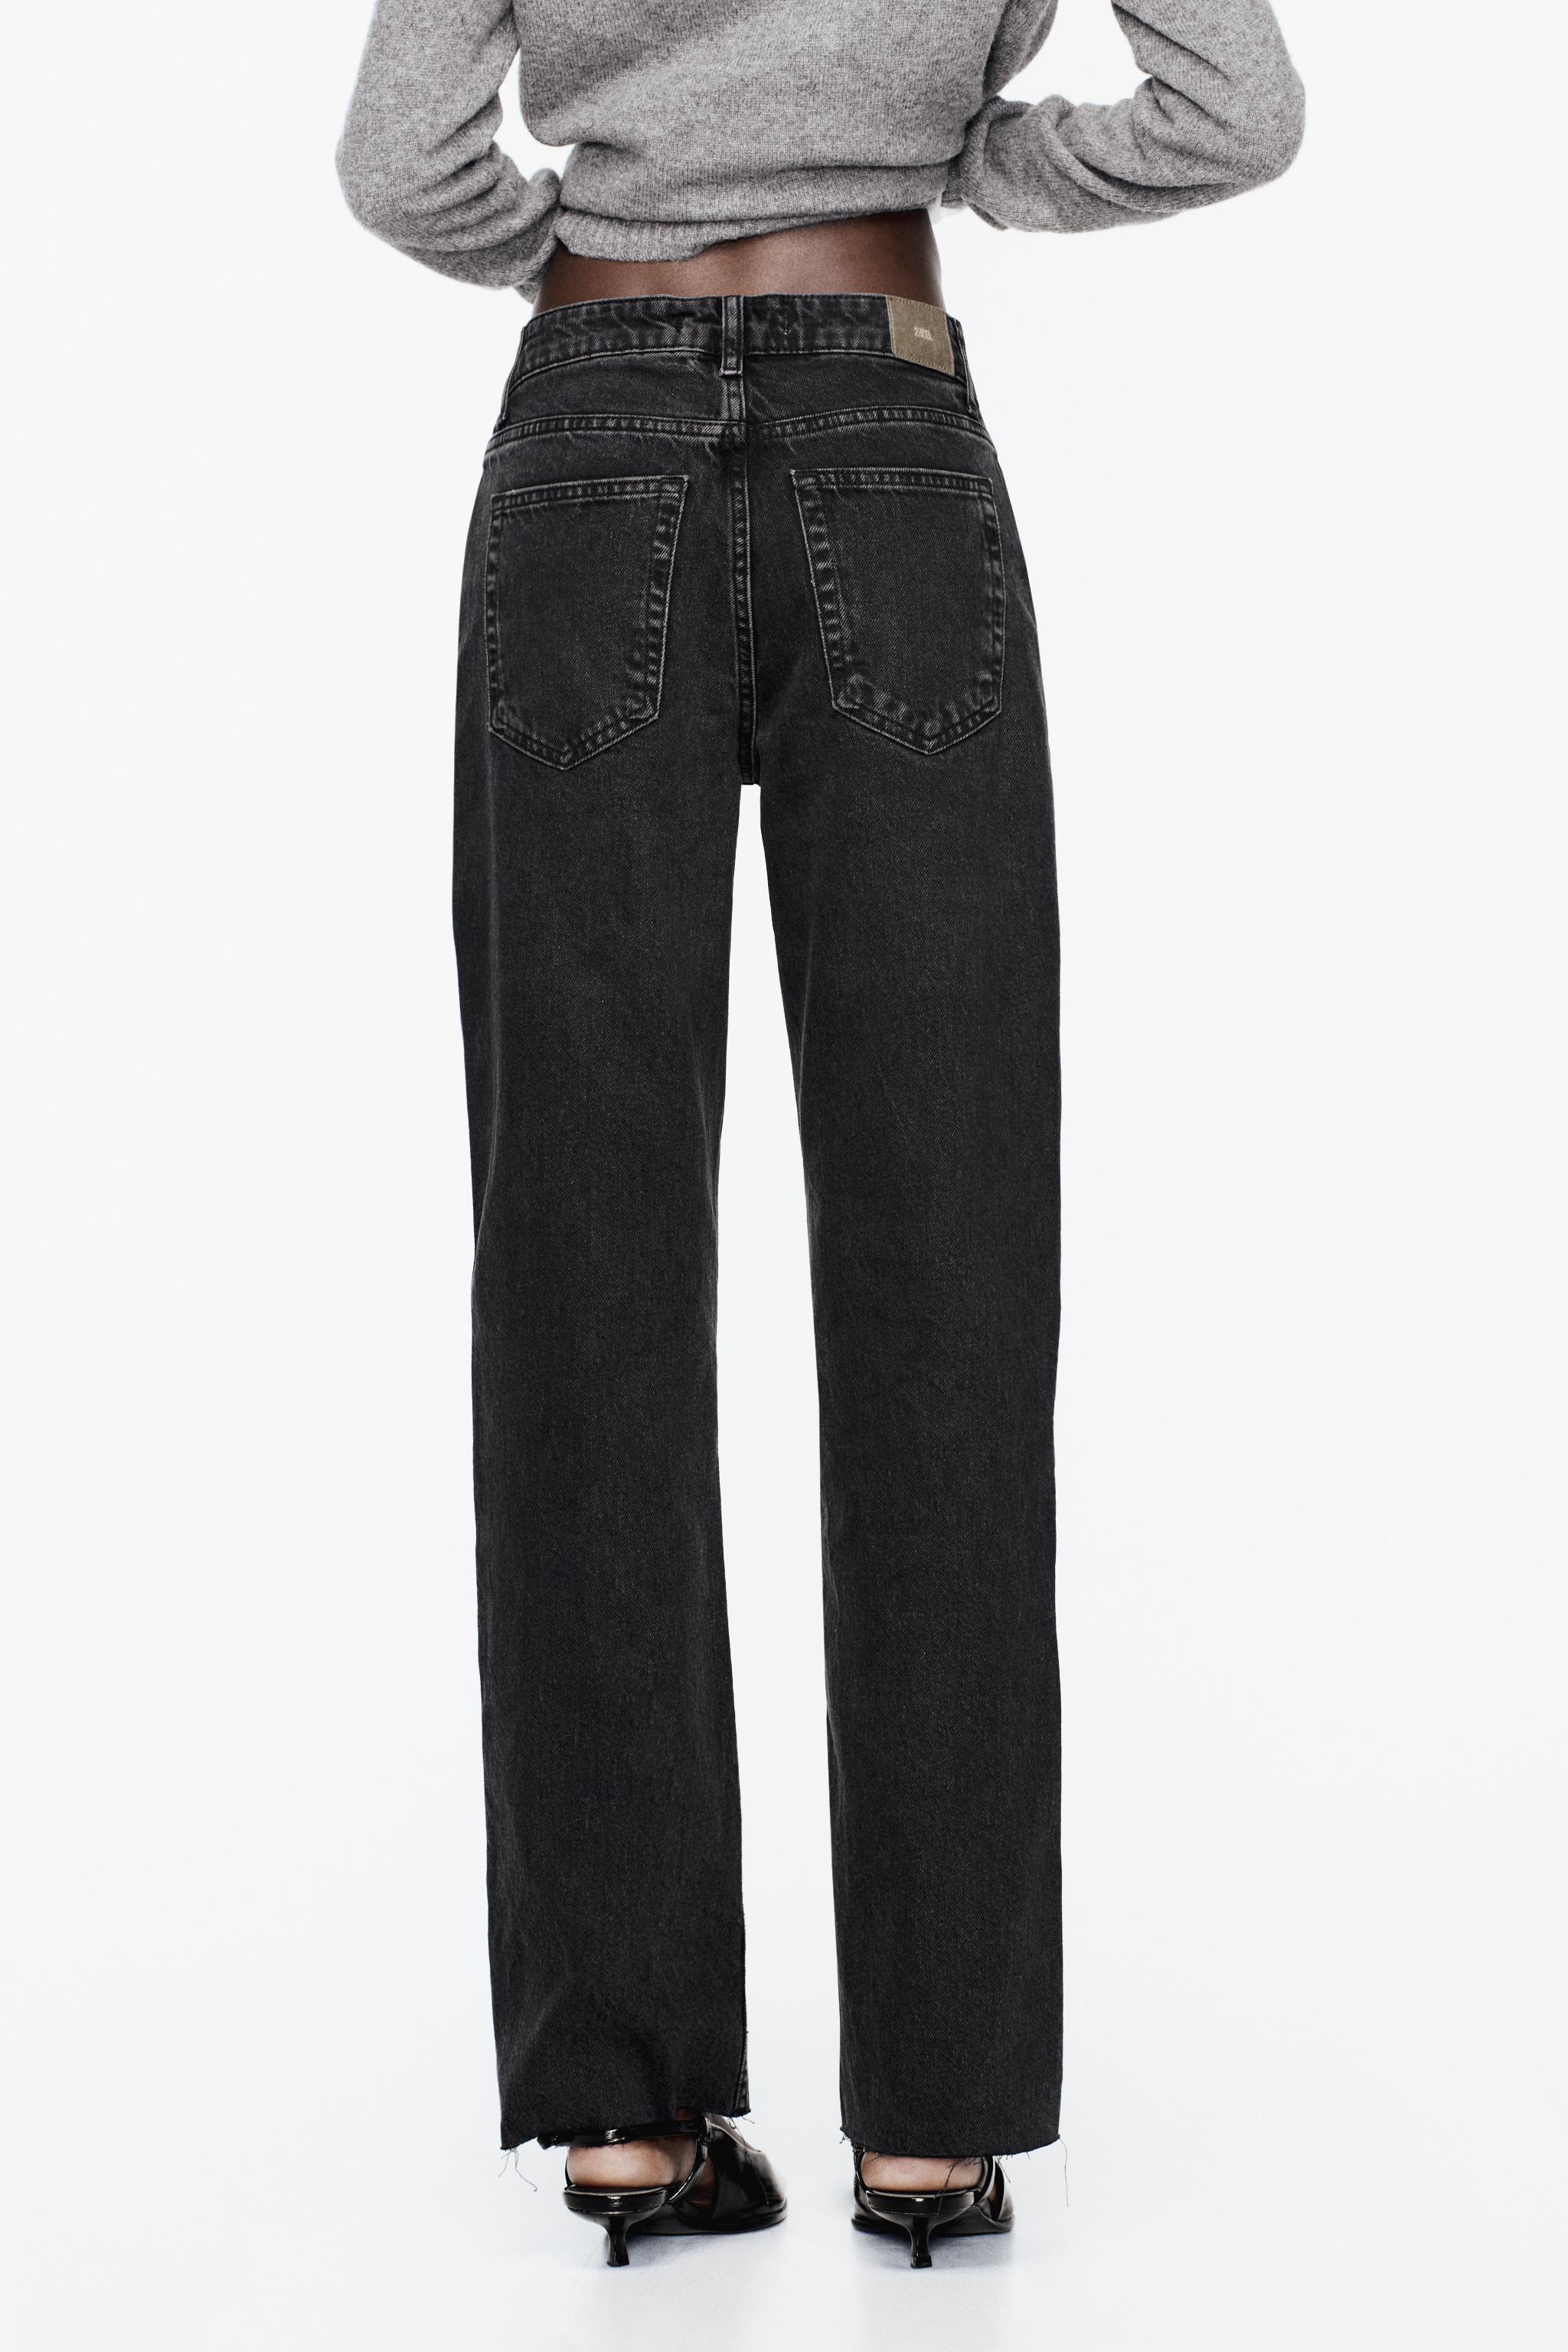 Zara, Pants & Jumpsuits, Zara Black Damask Print Mid Rise Straight Leg  Cropped Bottom Zip Dress Pant 5